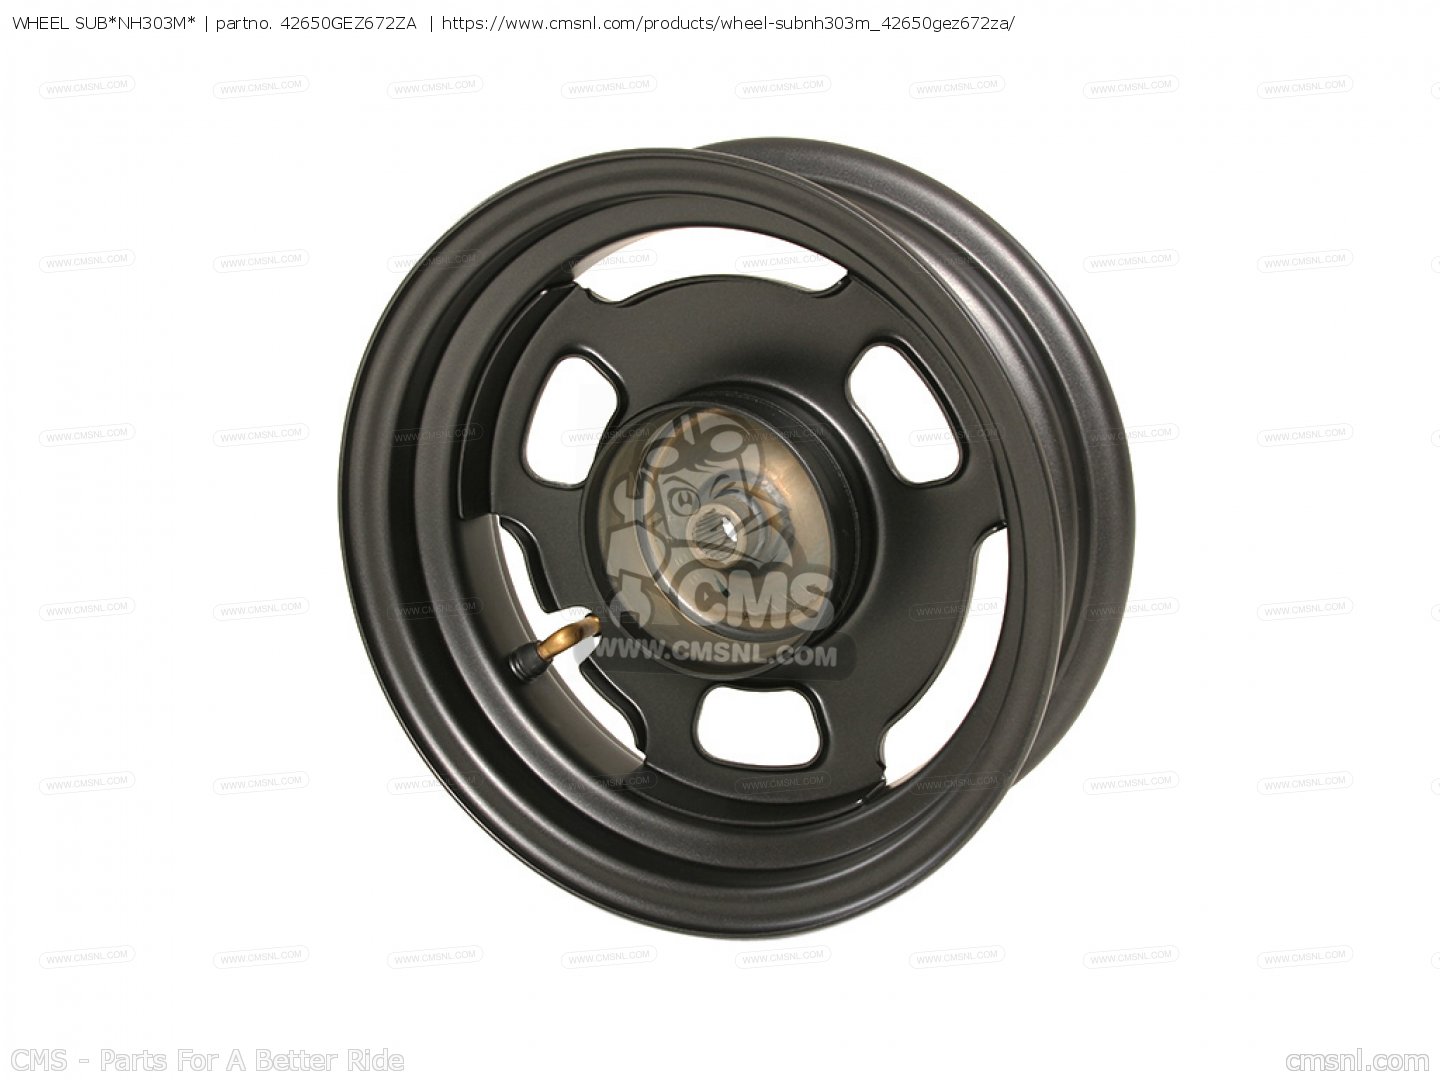 42650GEZ672ZA: Wheel Sub*nh303m* Honda - buy the 42650-GEZ-672ZA